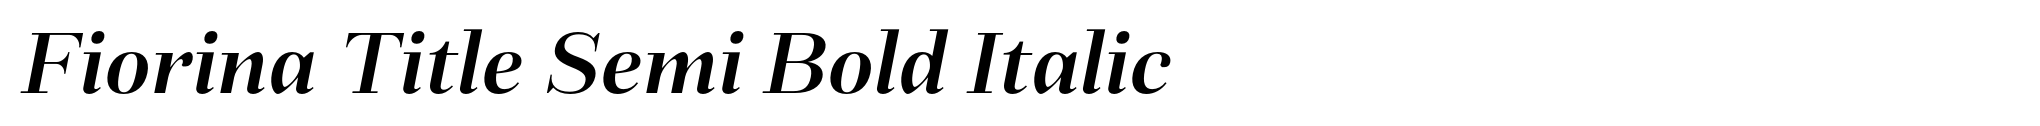 Fiorina Title Semi Bold Italic image